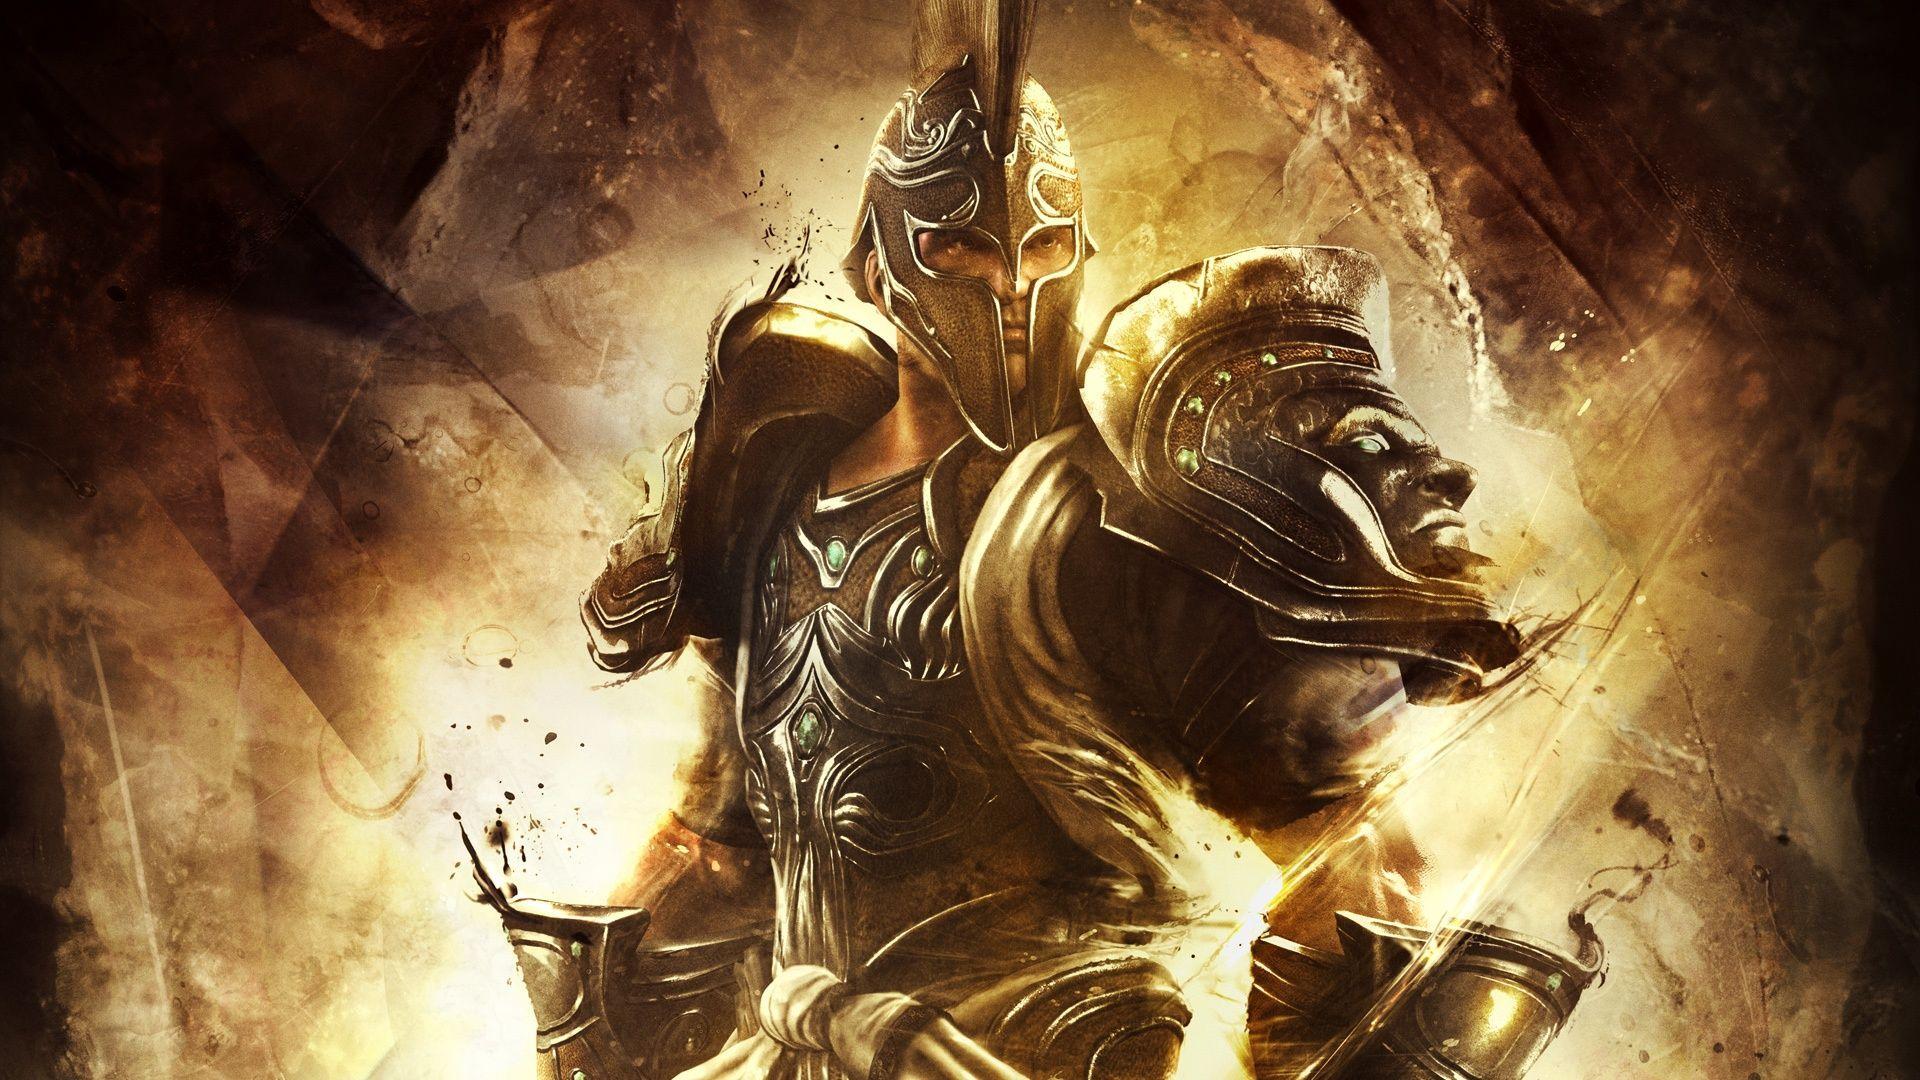 God Of War Wallpaper Hd 1080p 192 Game Gaming Pc Mac Android Games